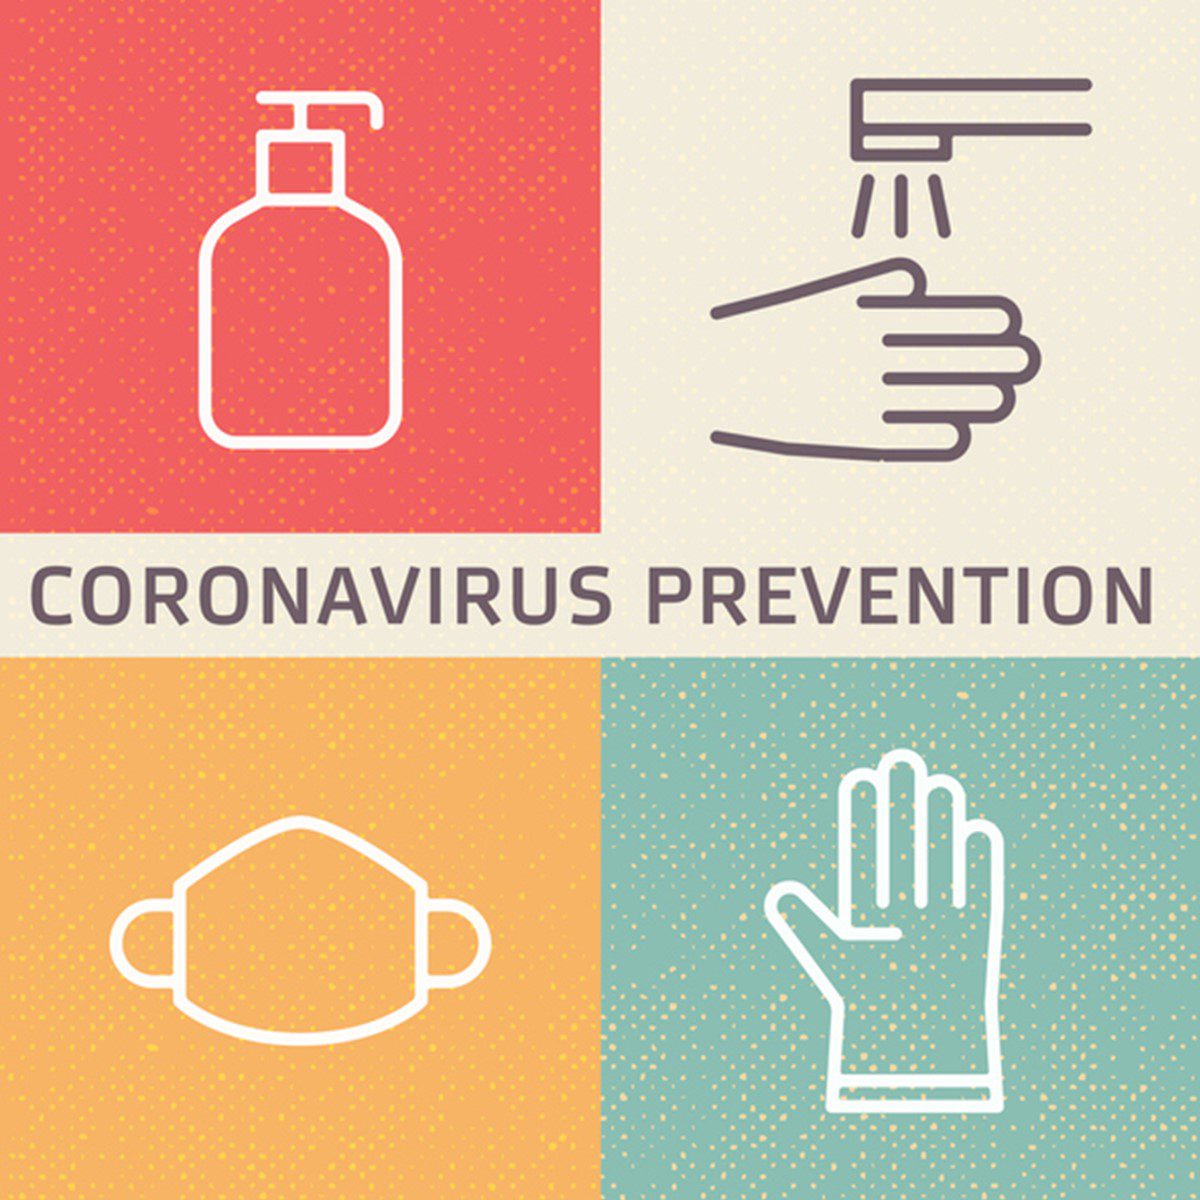 Corona virus prevention